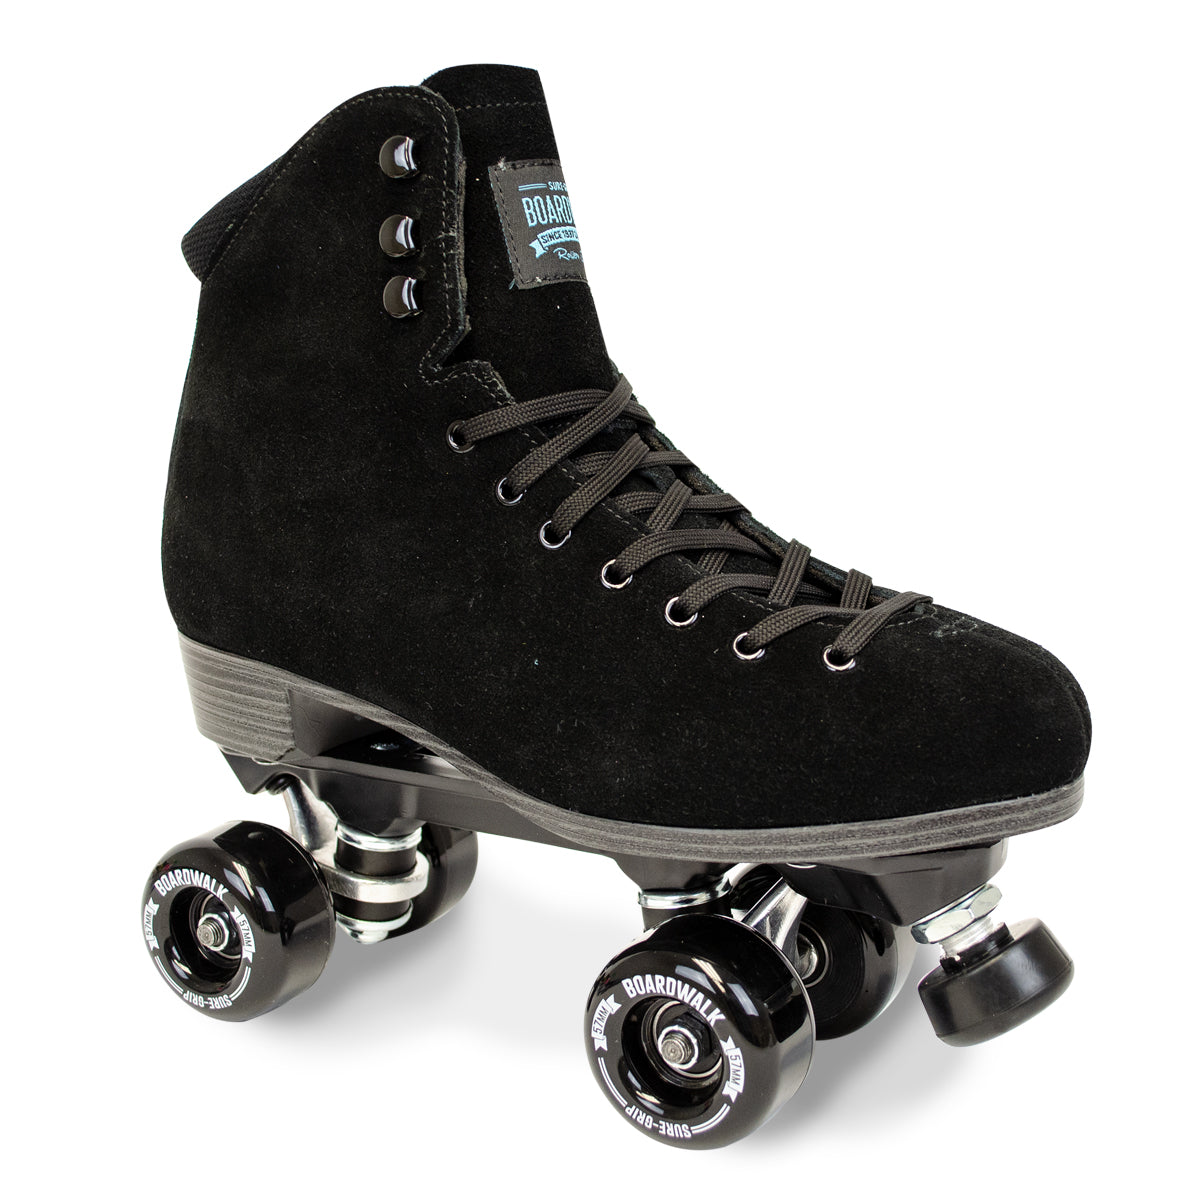 Sure-Grip boardwalk plus roller skate